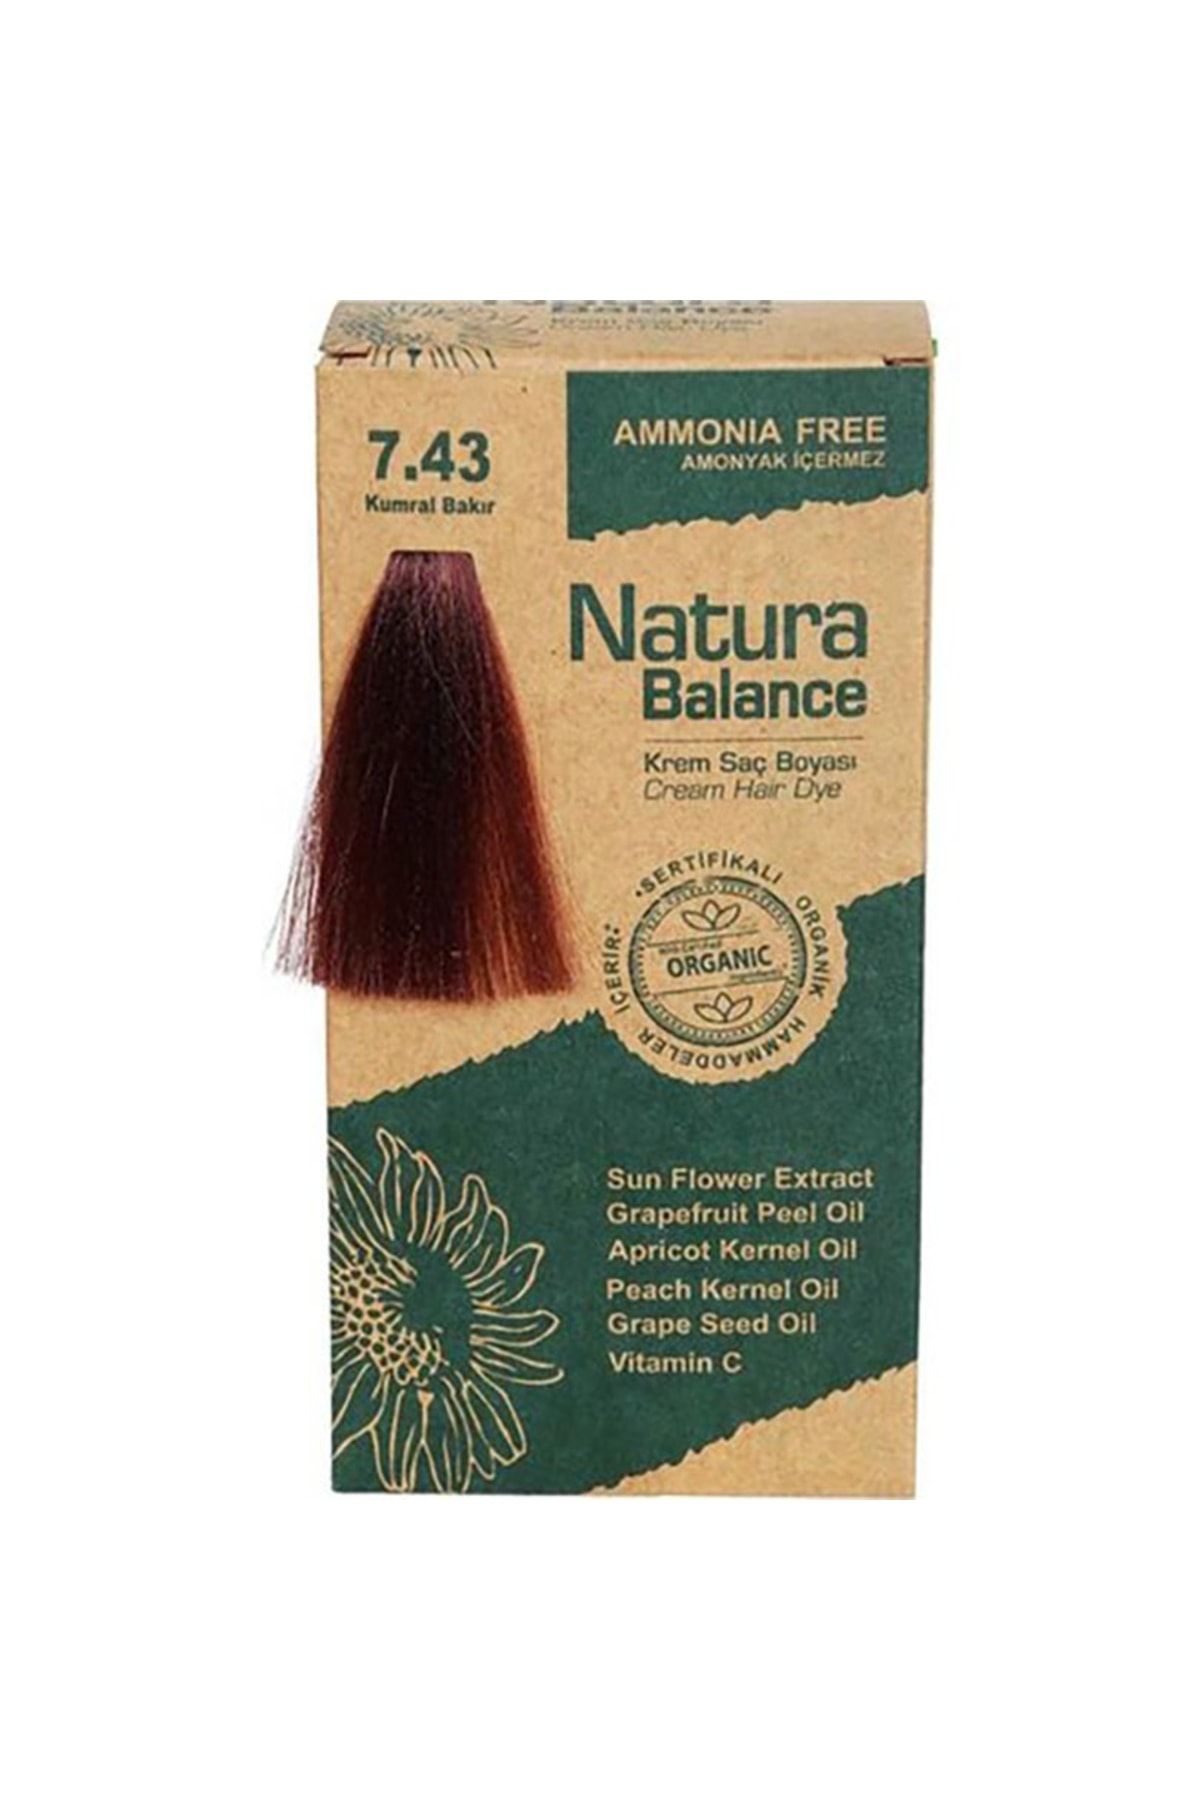 NATURABALANCE Natura Balance Organik Saç Boyası Seti Kumral Bakır 7.43